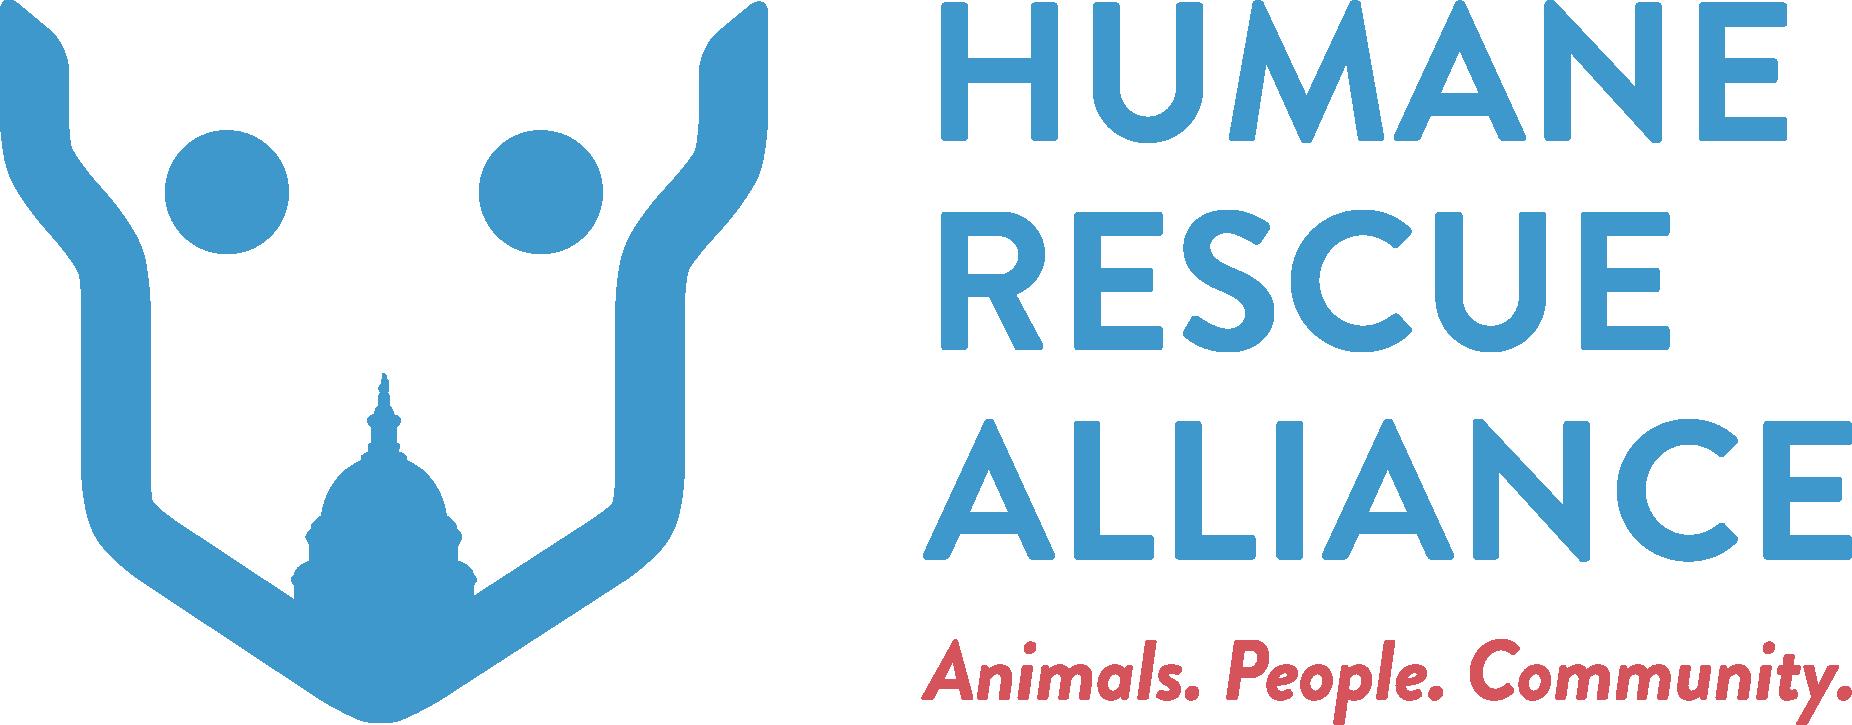 humane rescue alliance logo.jpg